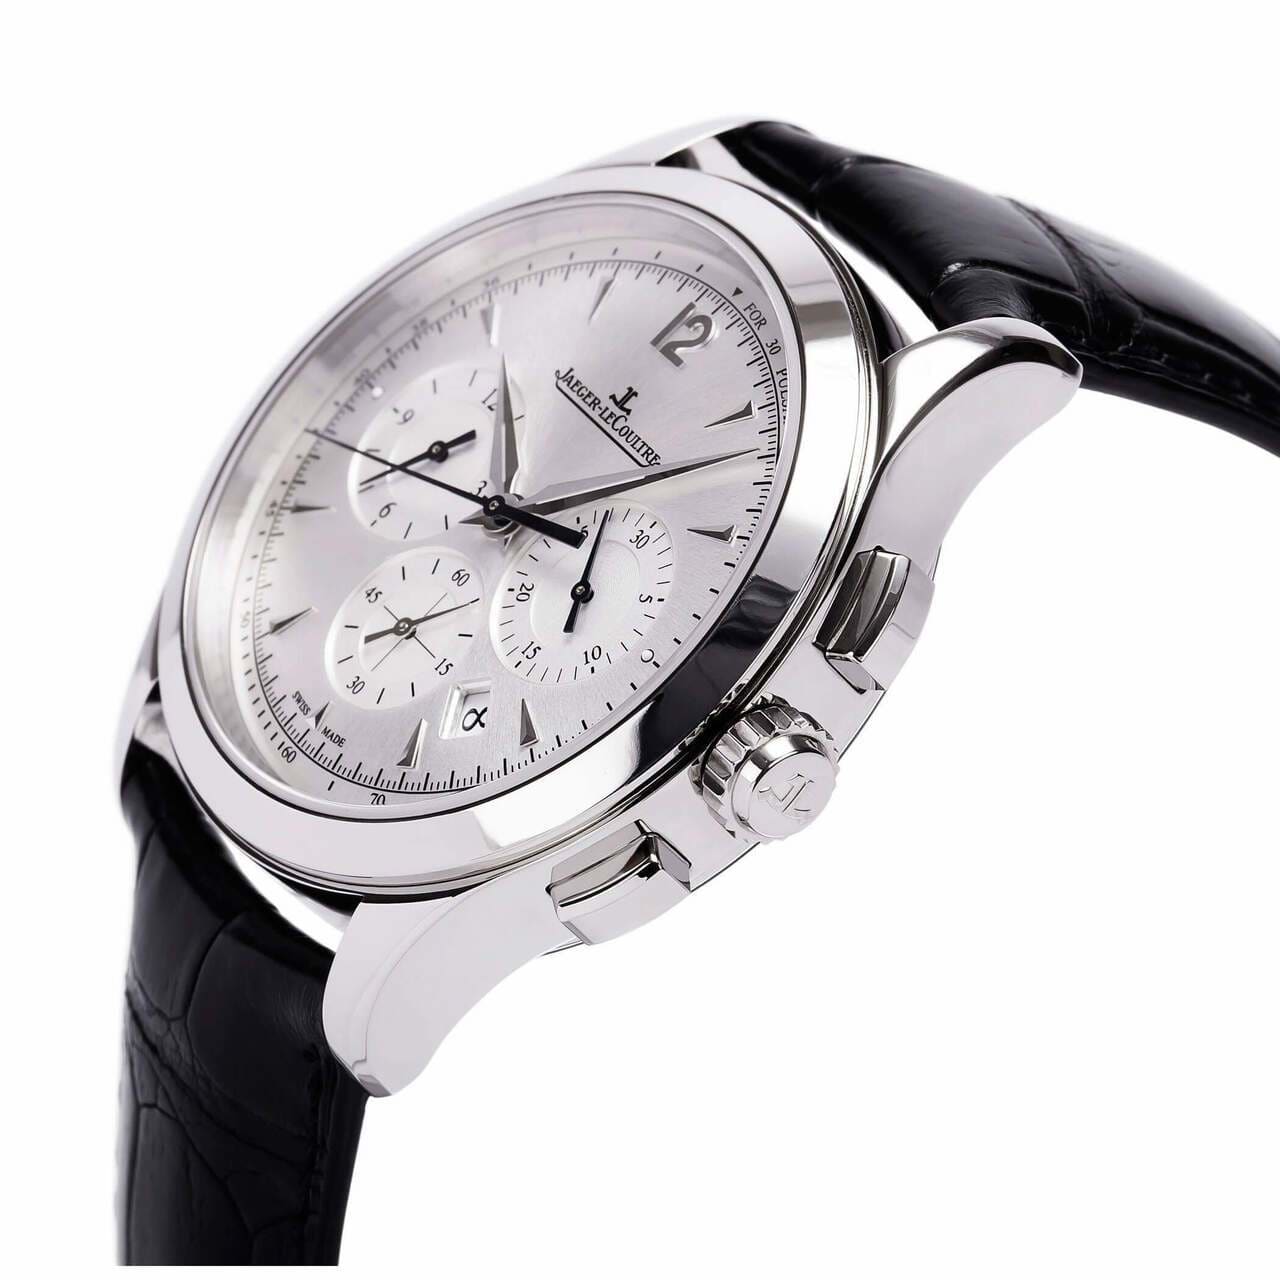 JAEGER LECOULTRE Q1538420 Master Chronograph Automatic Men's Watch